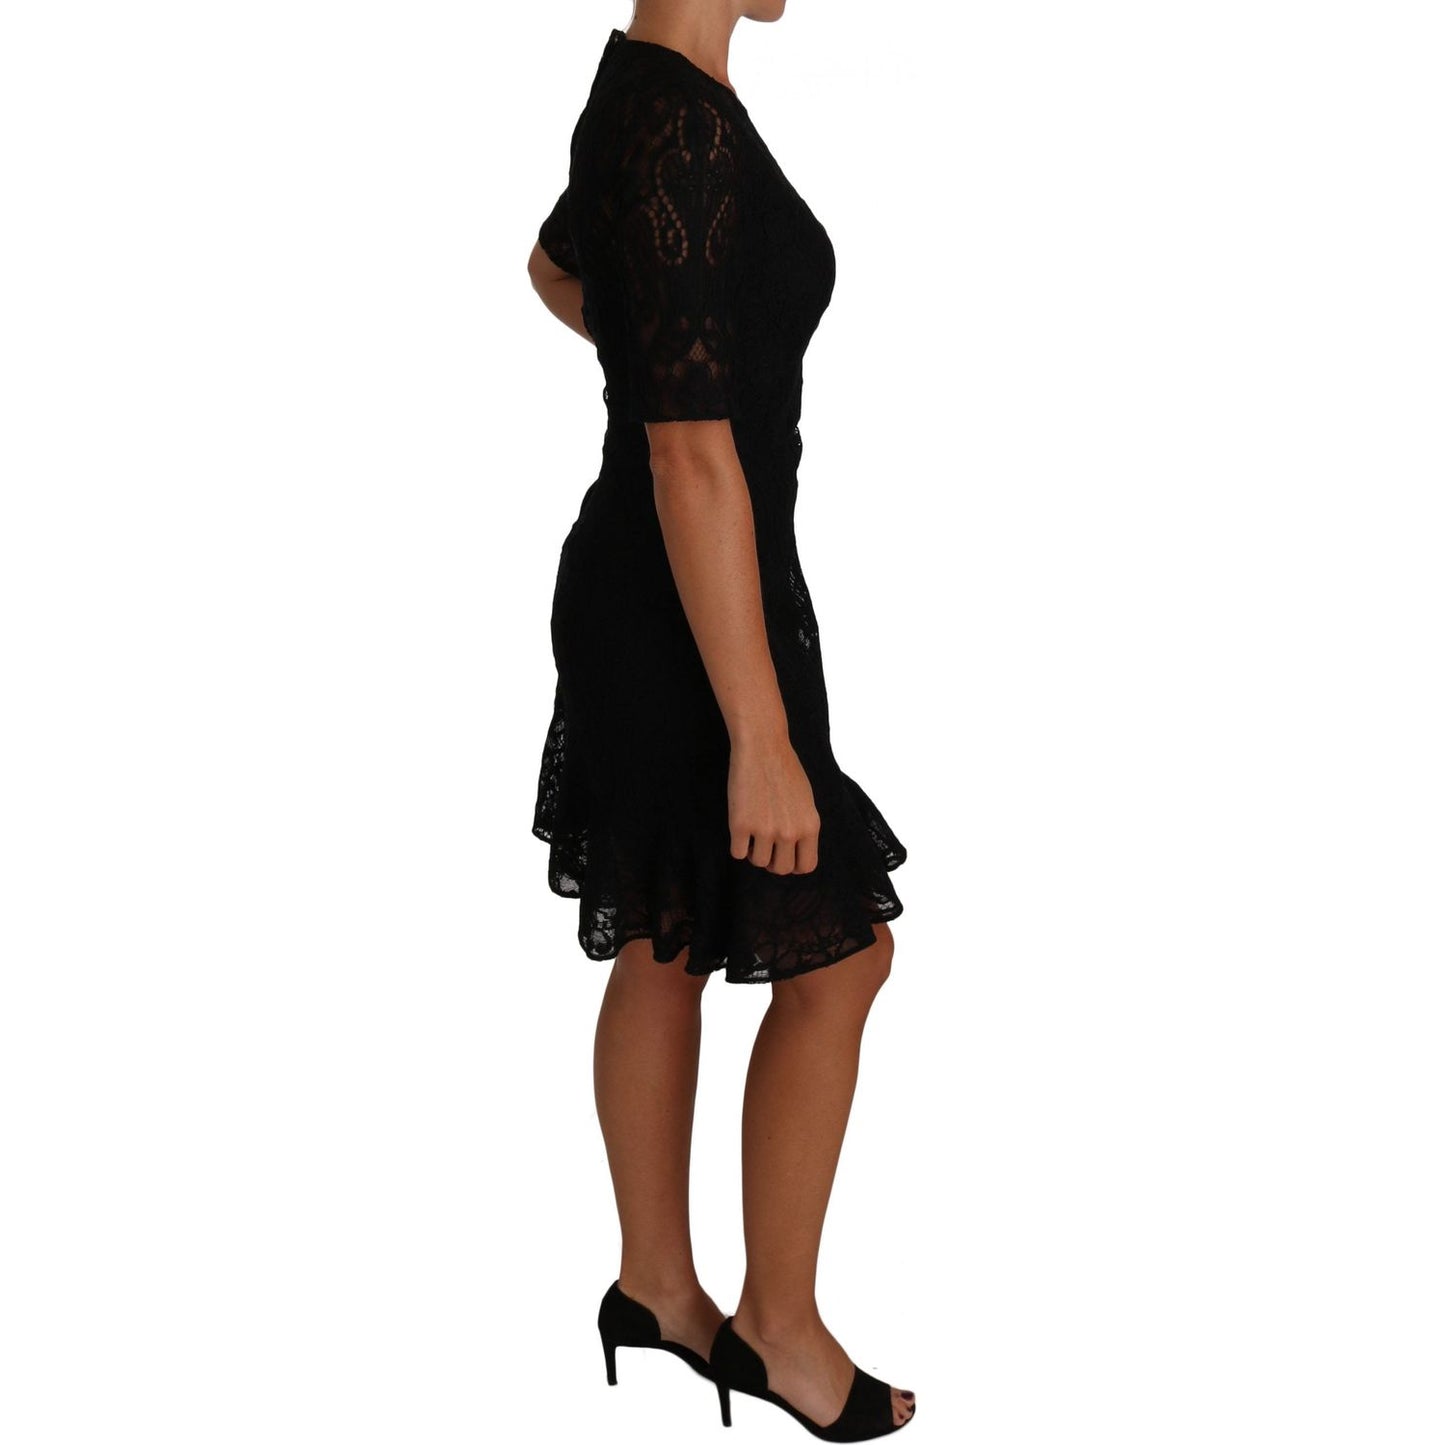 Dolce & Gabbana Chic Black Lace Sheath Dress with Silk Lining chic-black-lace-sheath-dress-with-silk-lining